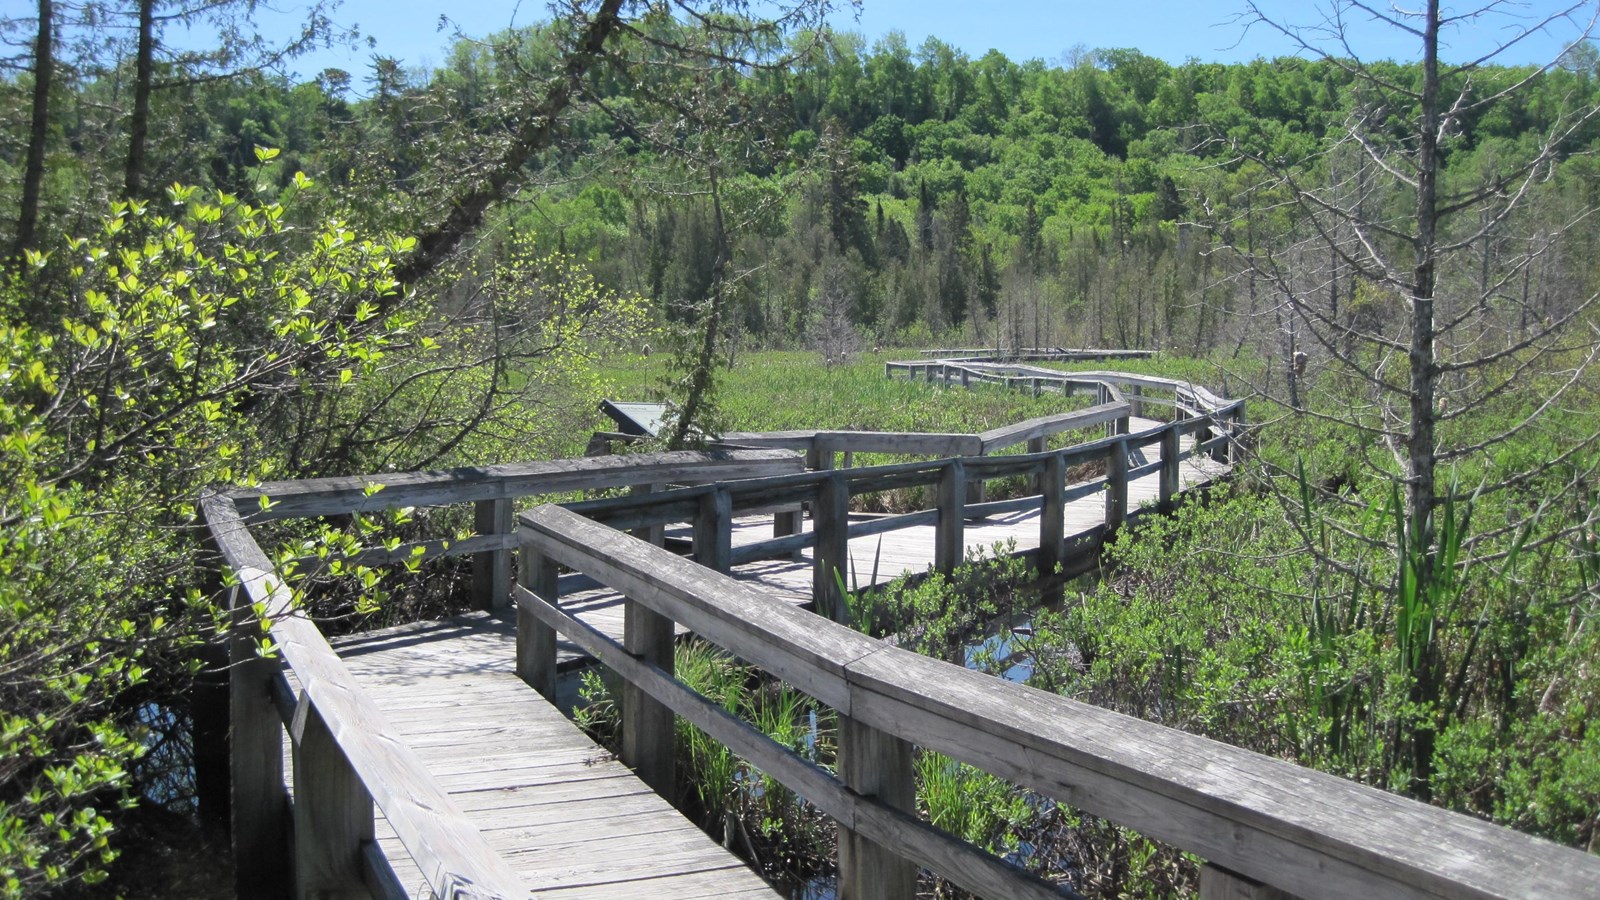 A wooden boardwalk zigzags through the green June marsh landscape